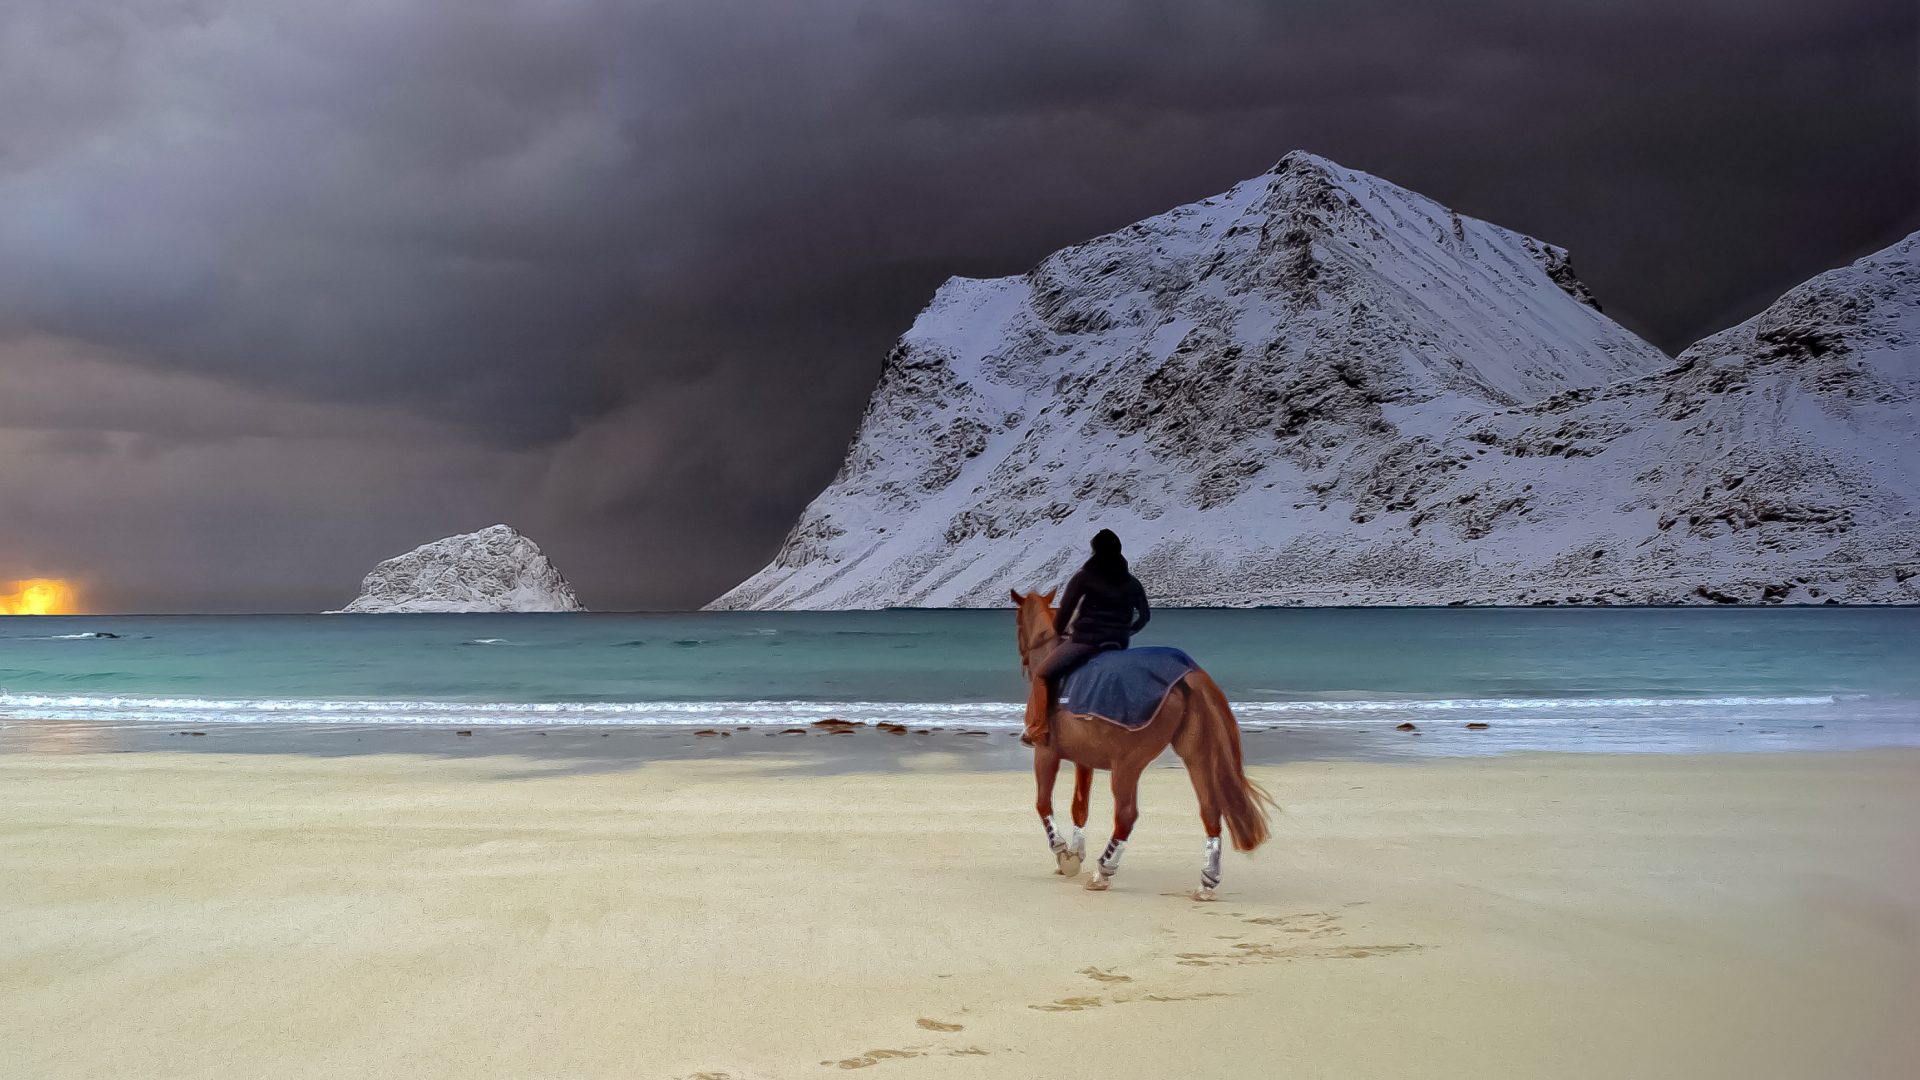 Обои Horse Riding On Beach 1920x1080